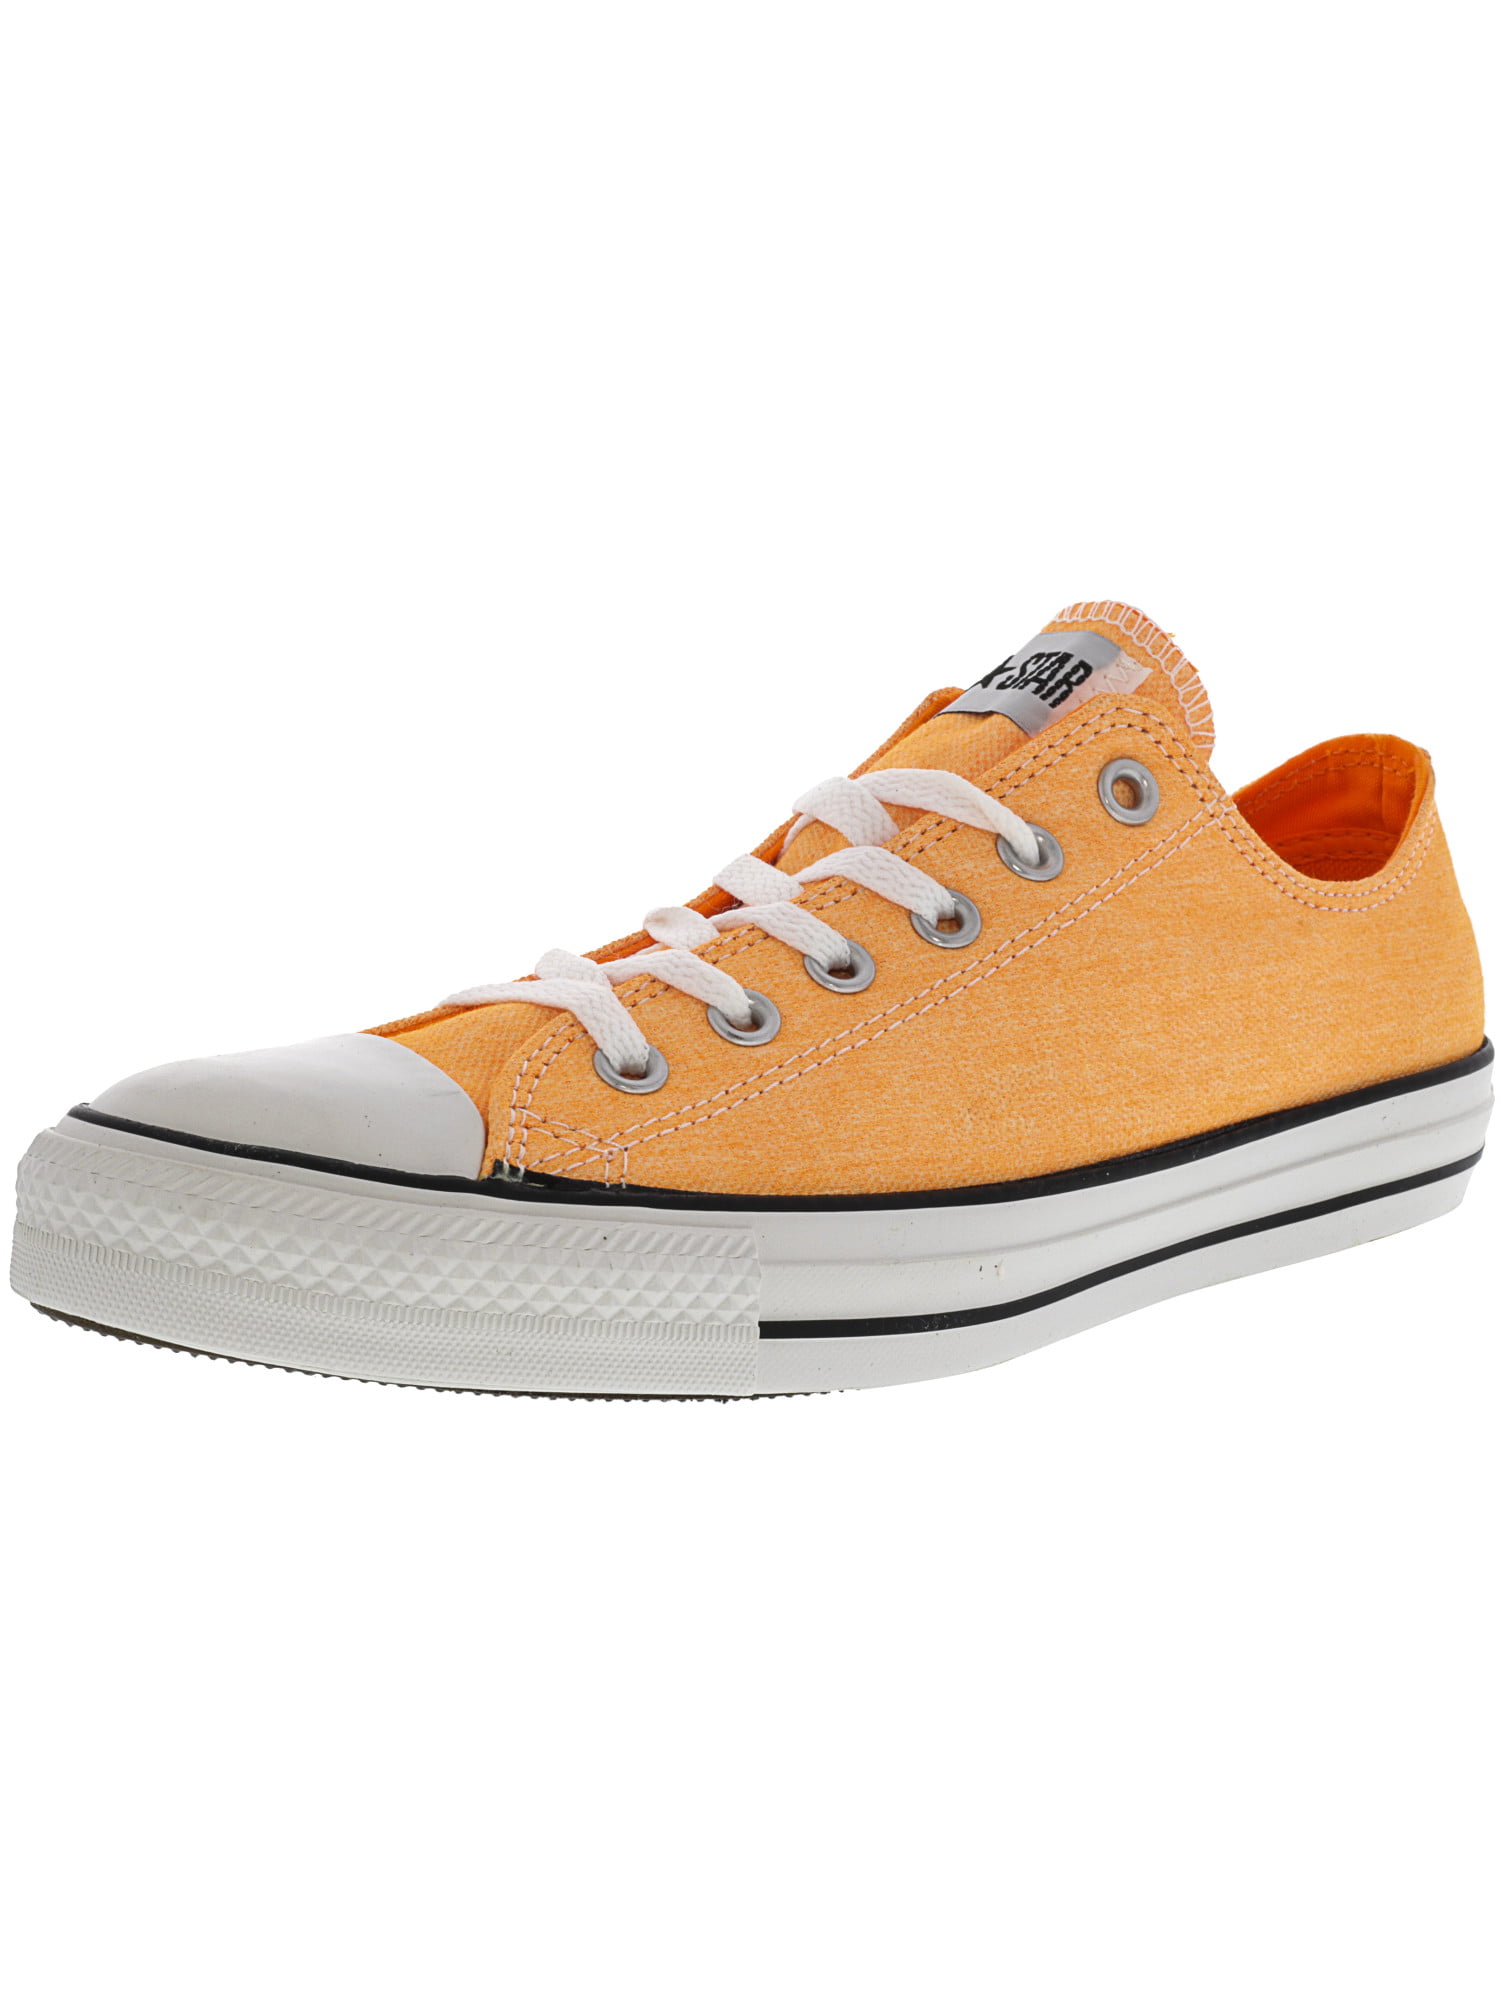 Converse Chuck Taylor All Star Ox Neon Orange Ankle-High Fashion ...